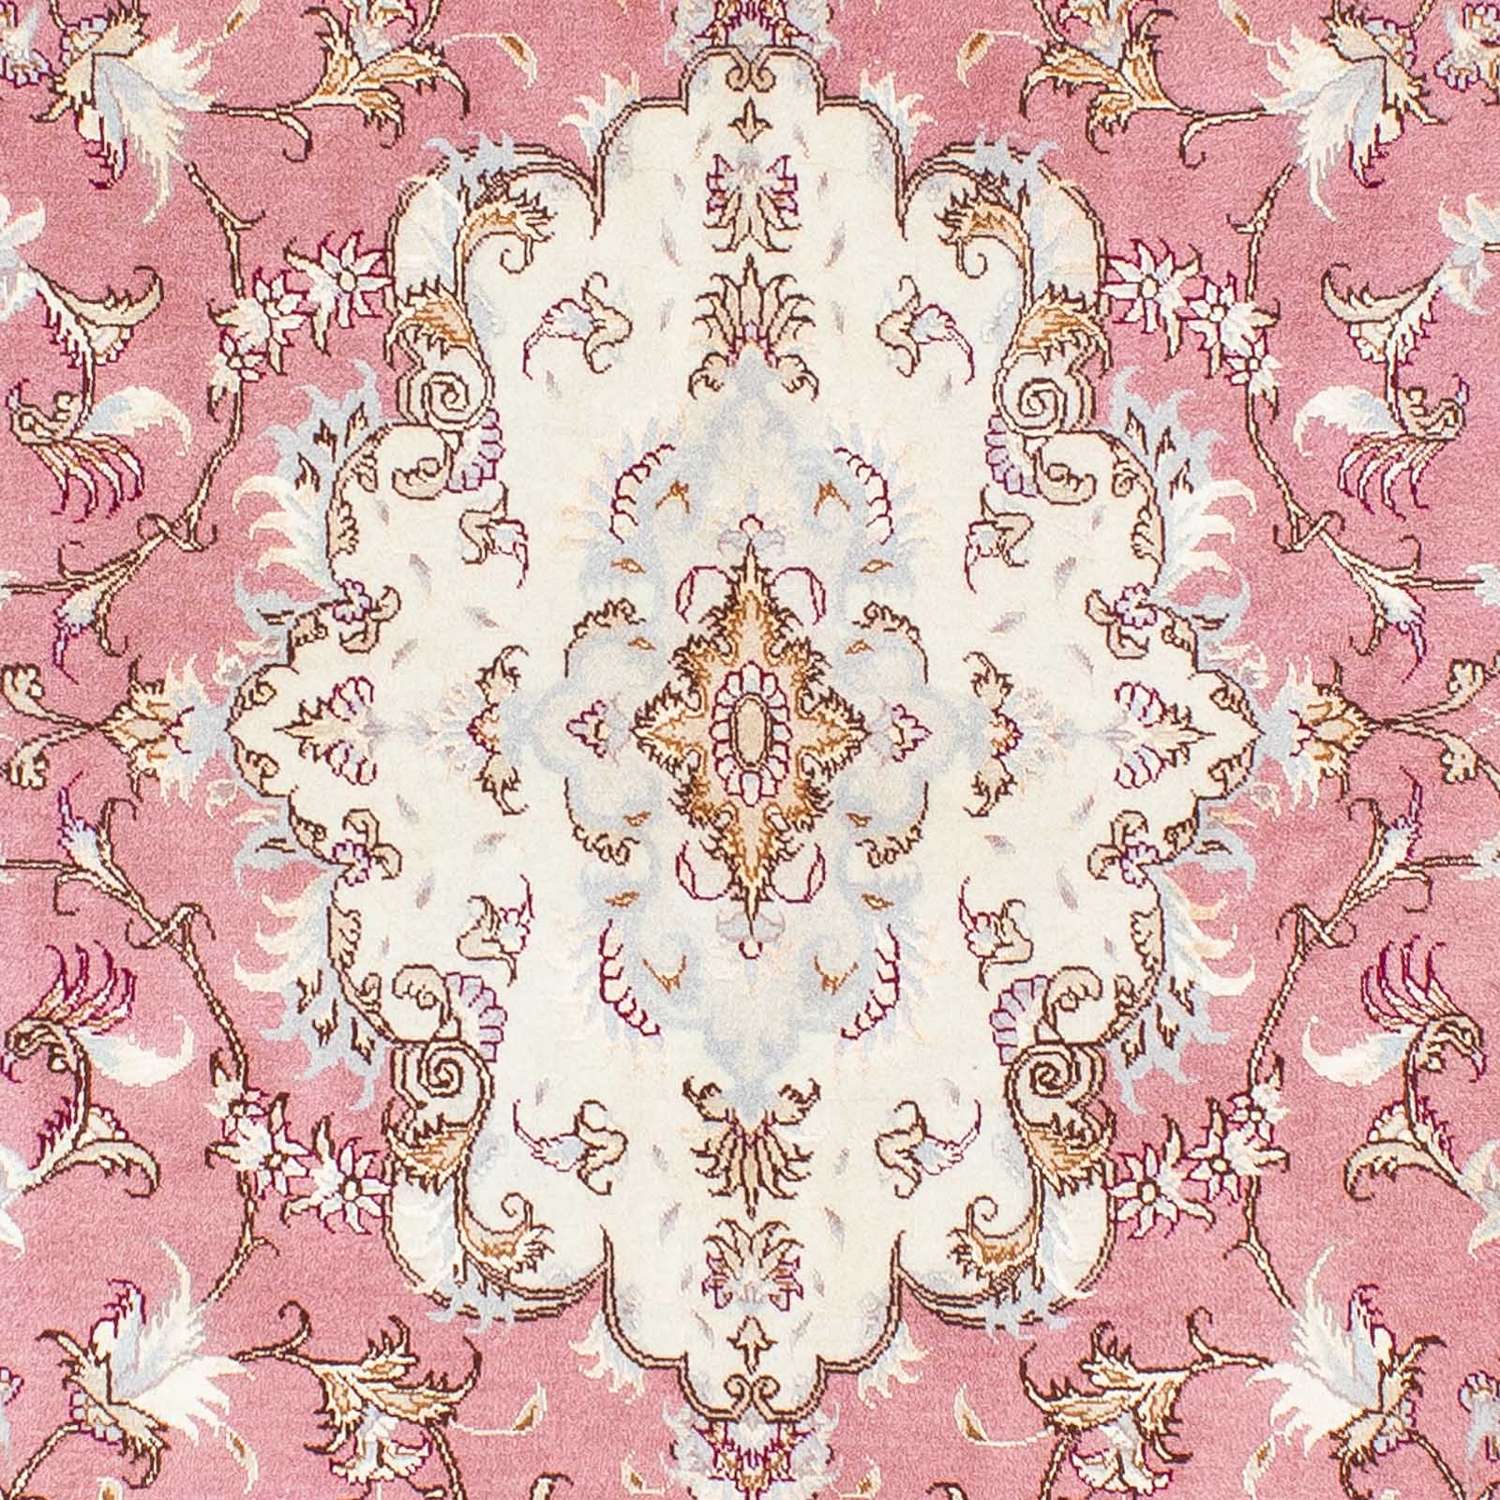 Persisk teppe - Tabriz - Royal - 236 x 166 cm - rosa